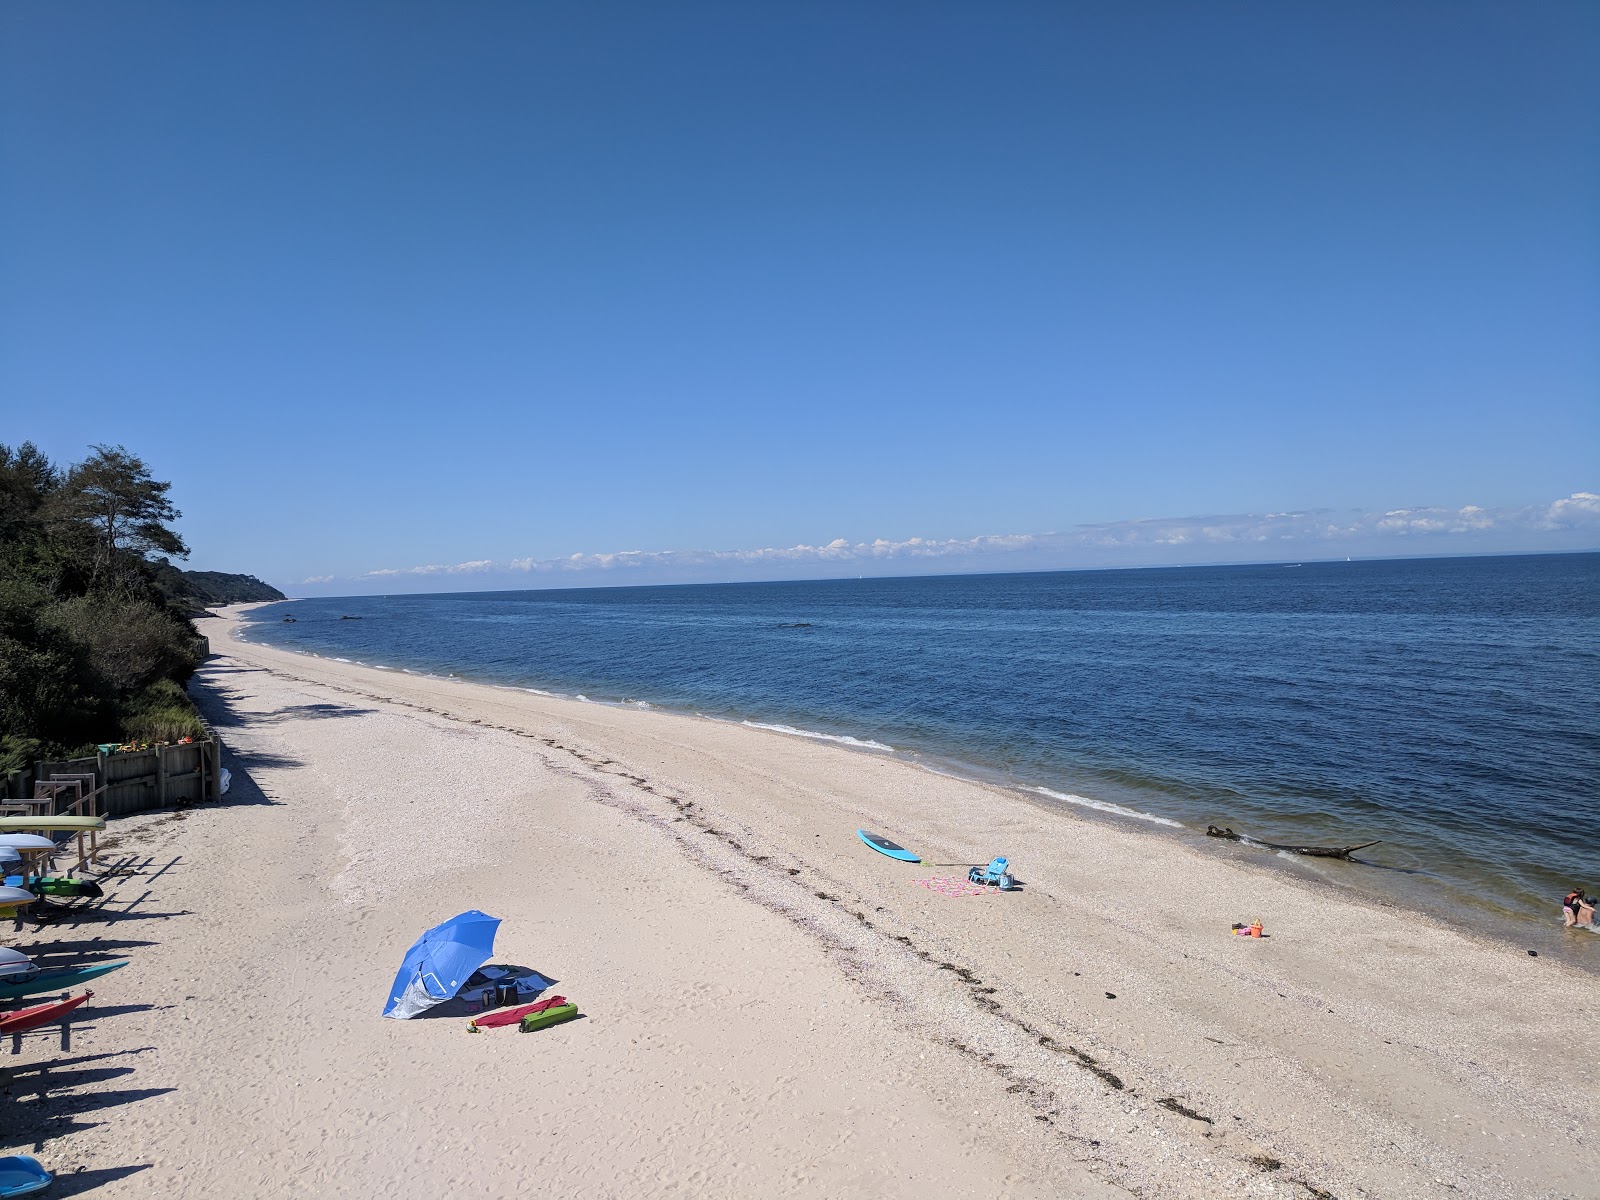 North Shore Beach的照片 带有蓝色纯水表面